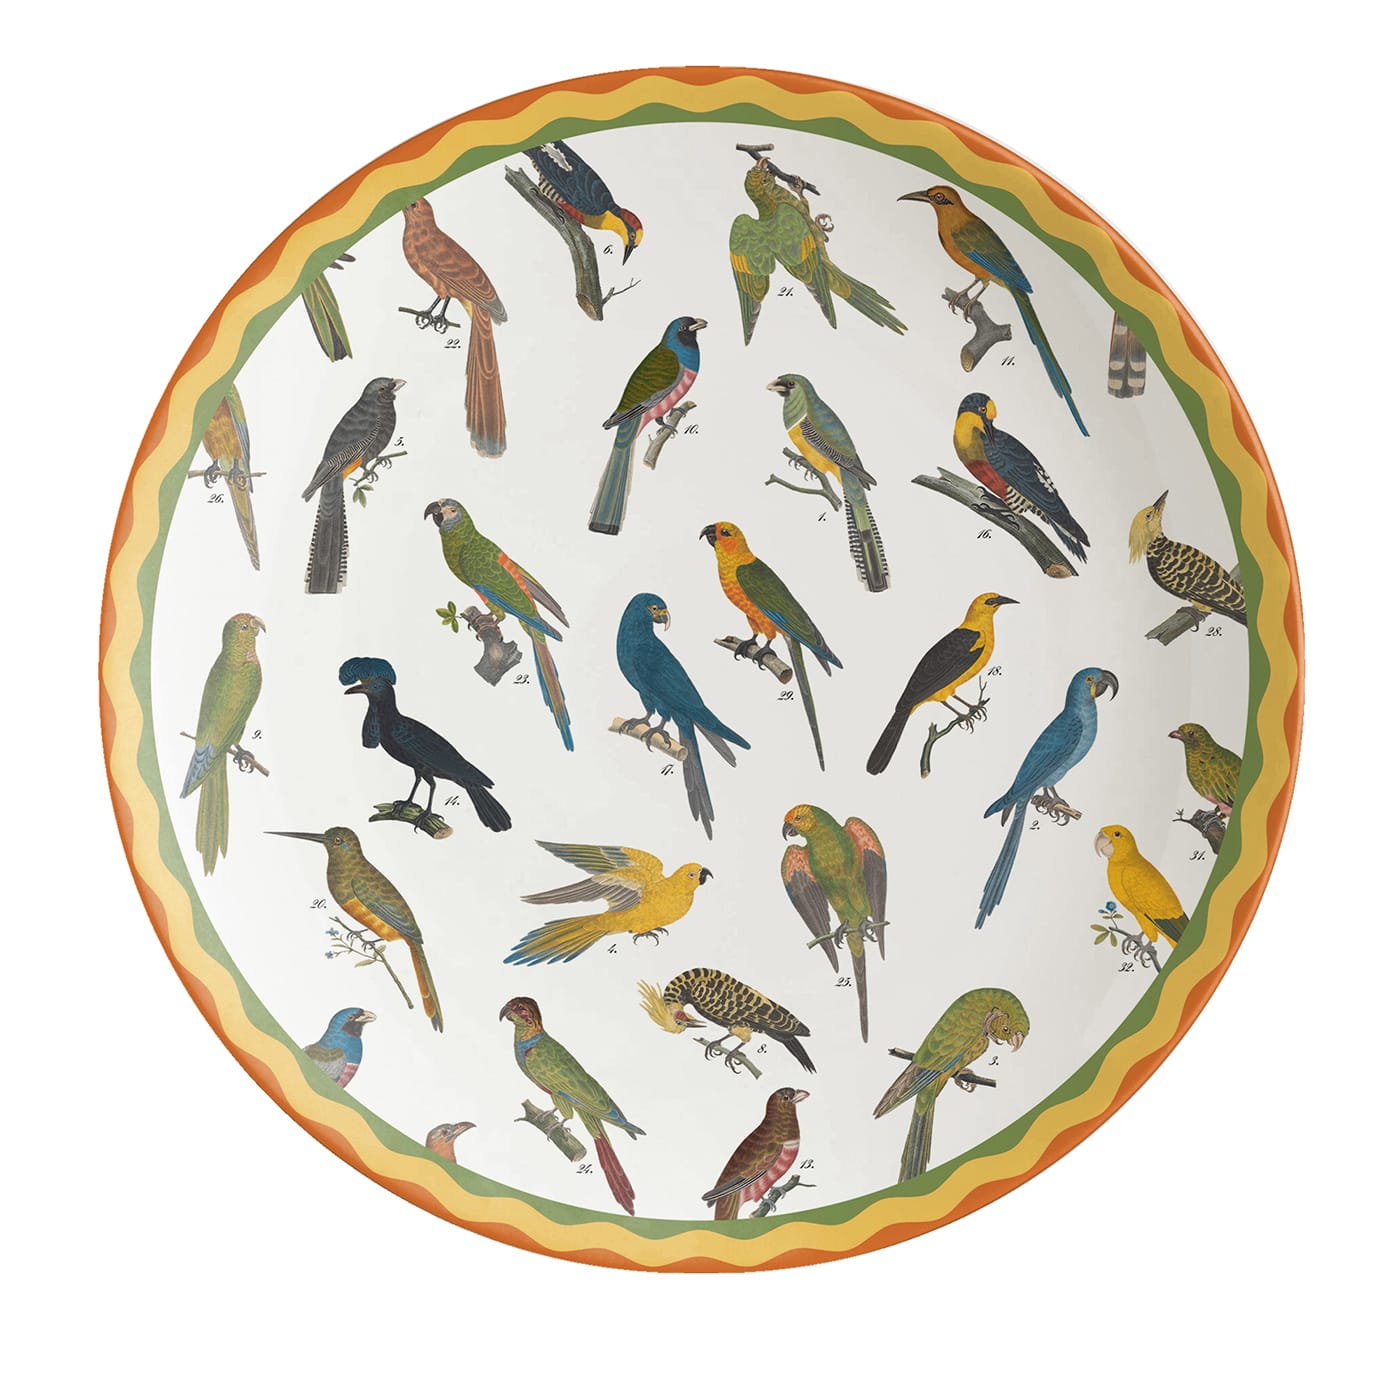 Cabinet de Curiosités Birds Charger Plate - Grand Tour by Vito Nesta